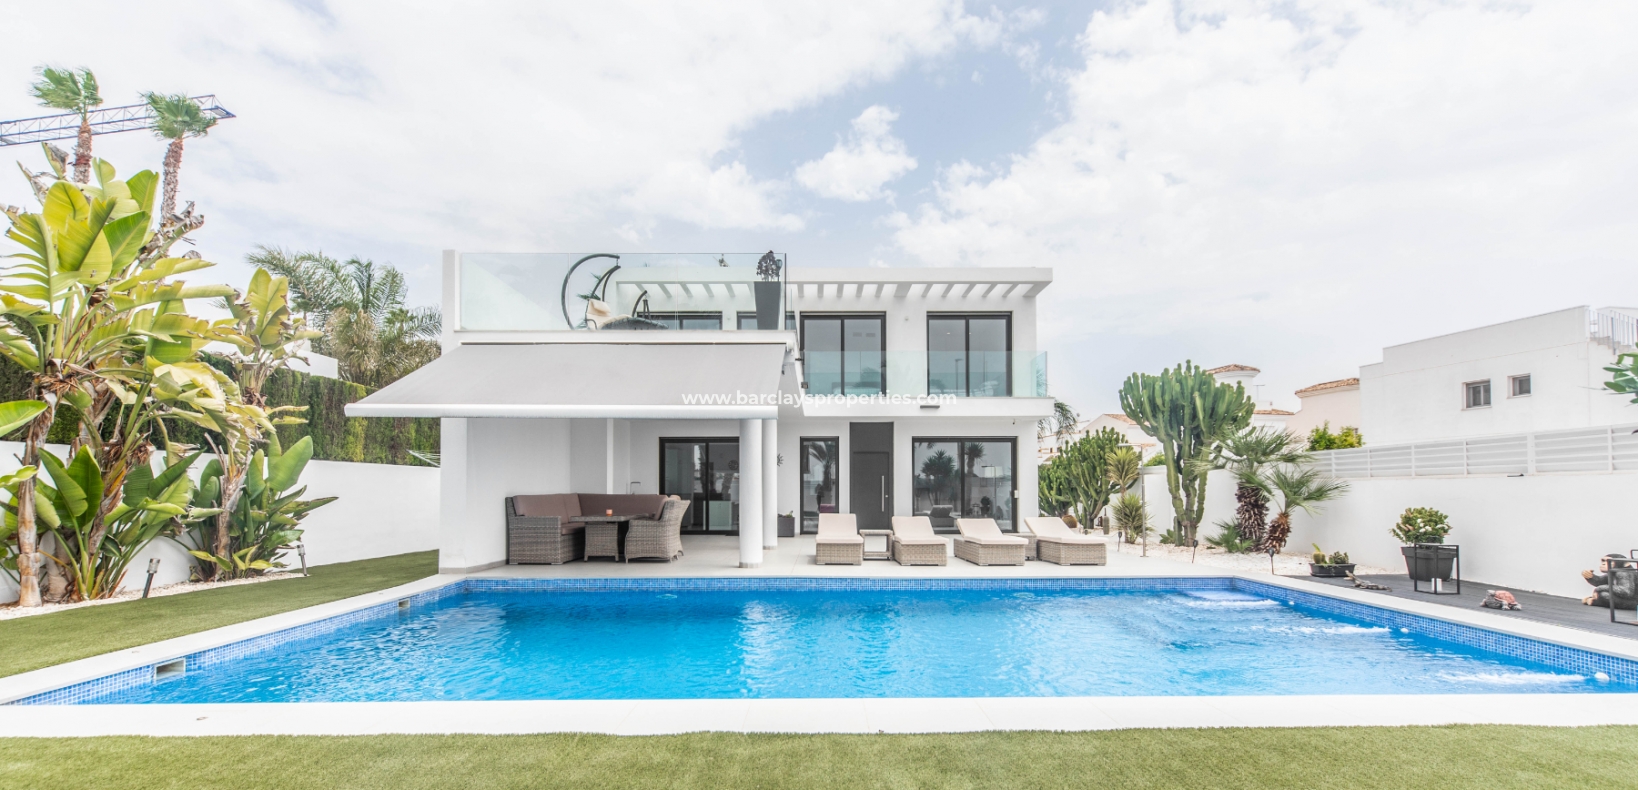 Luxury Villa for sale in Costa Blanca